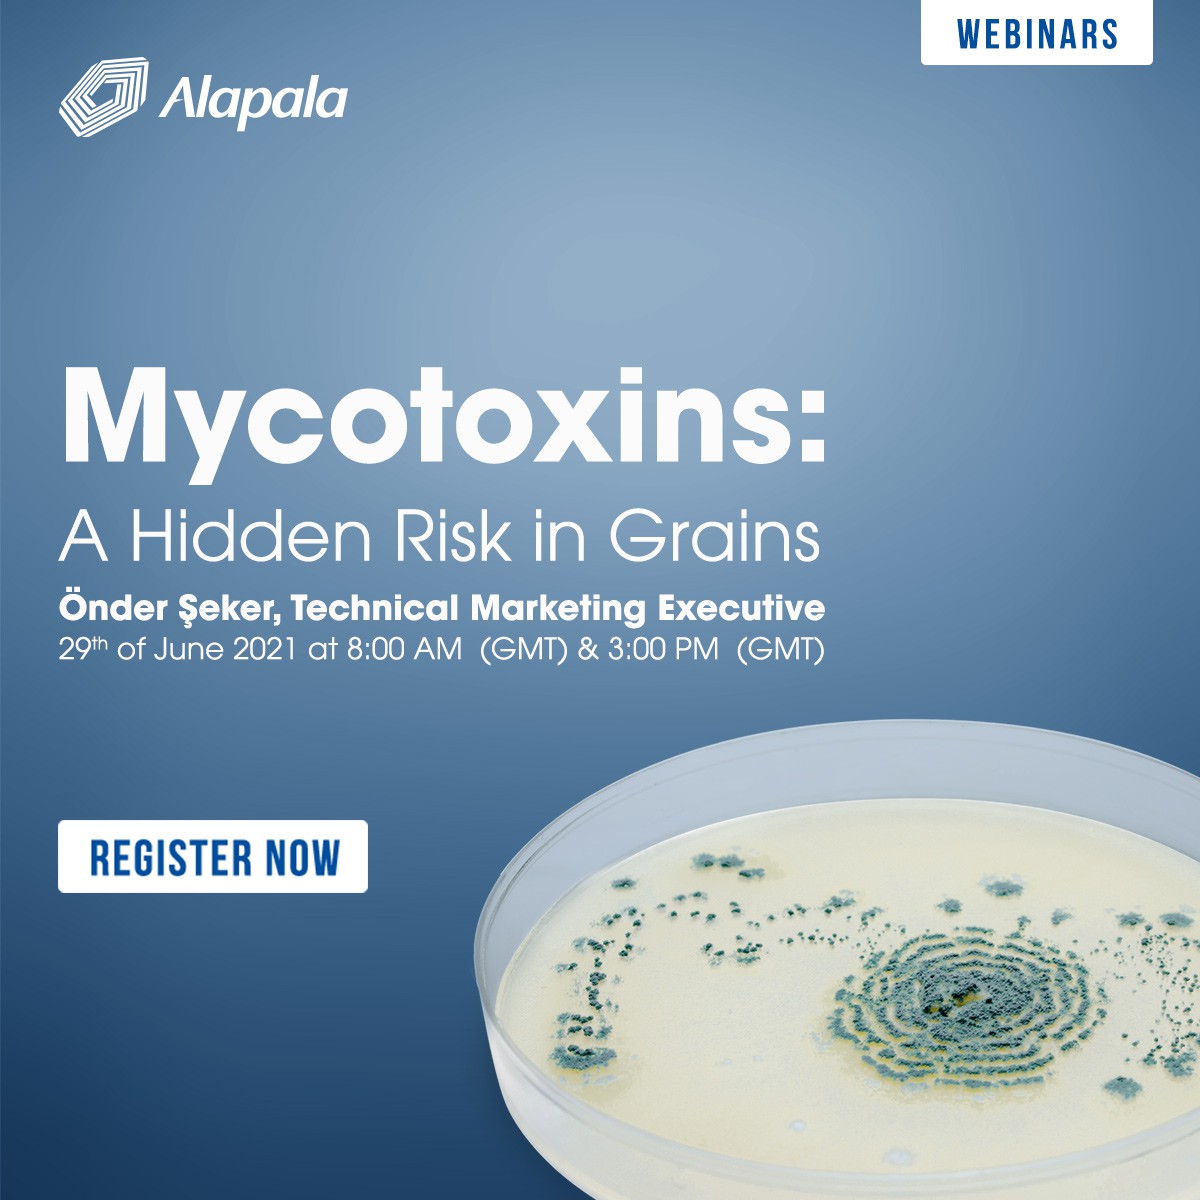 'Mycotoxins' seem to be a hidden risk in Grains!